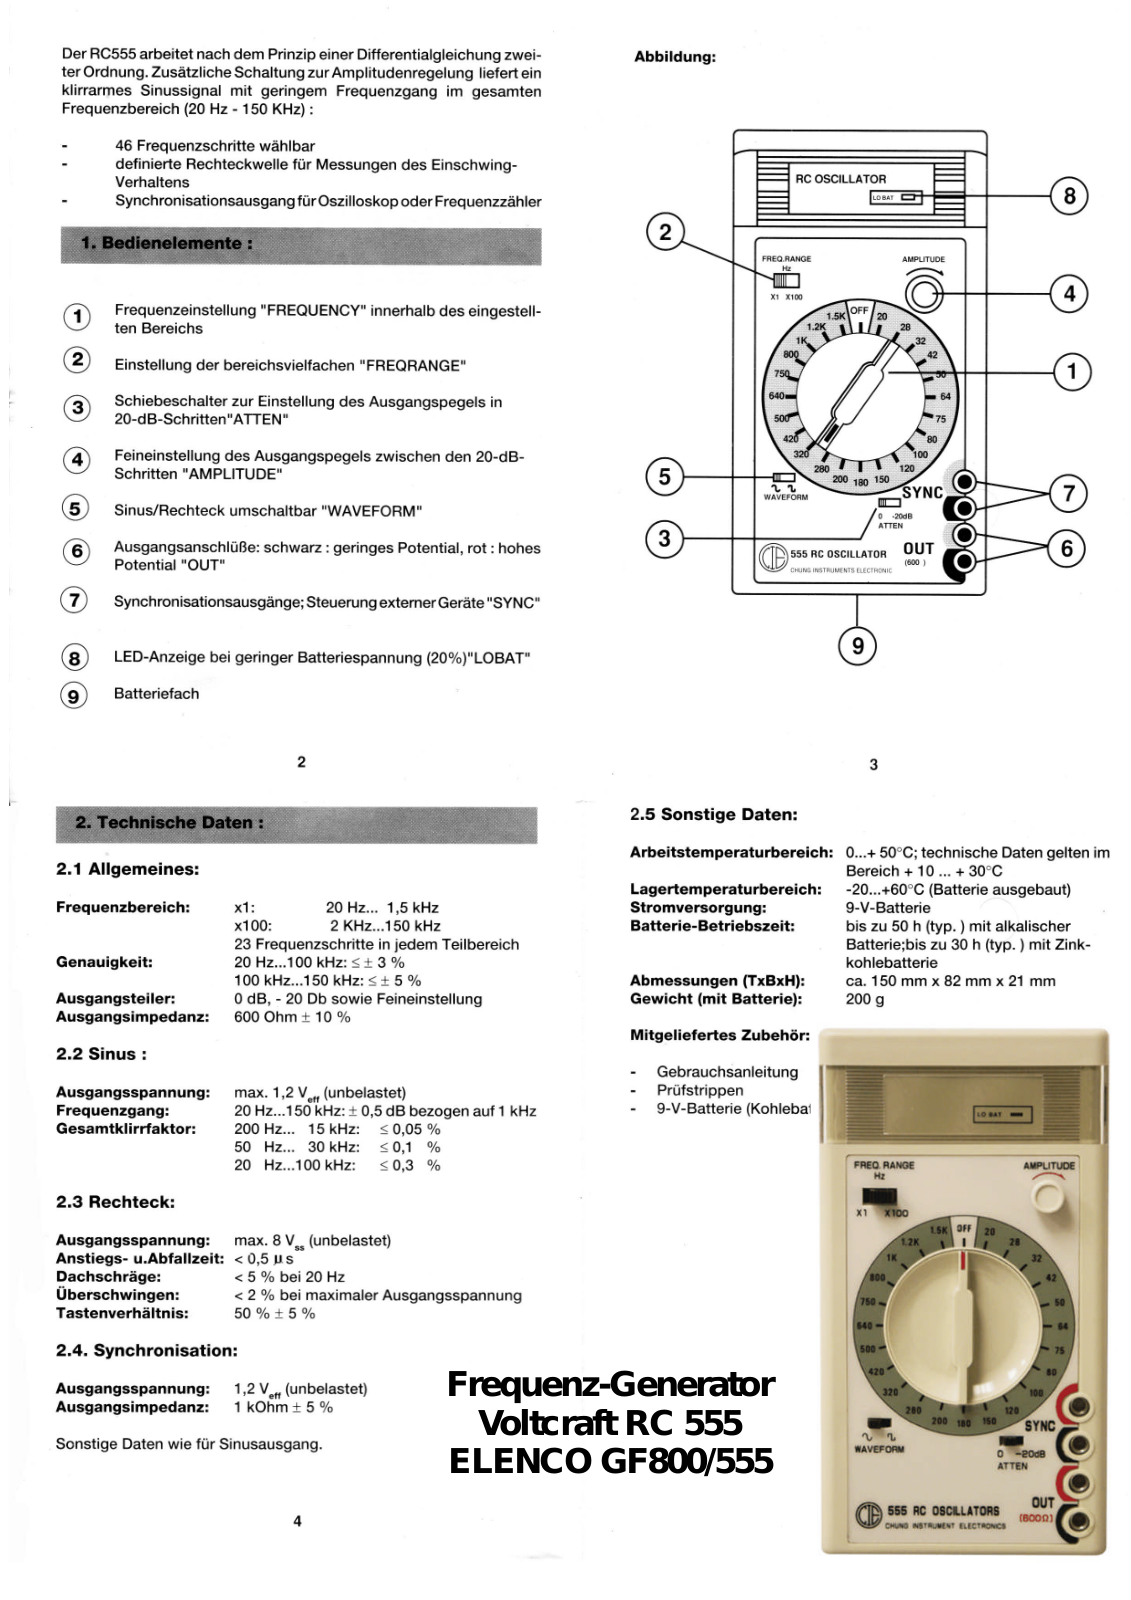 Voltcraft RC 555 User Manual